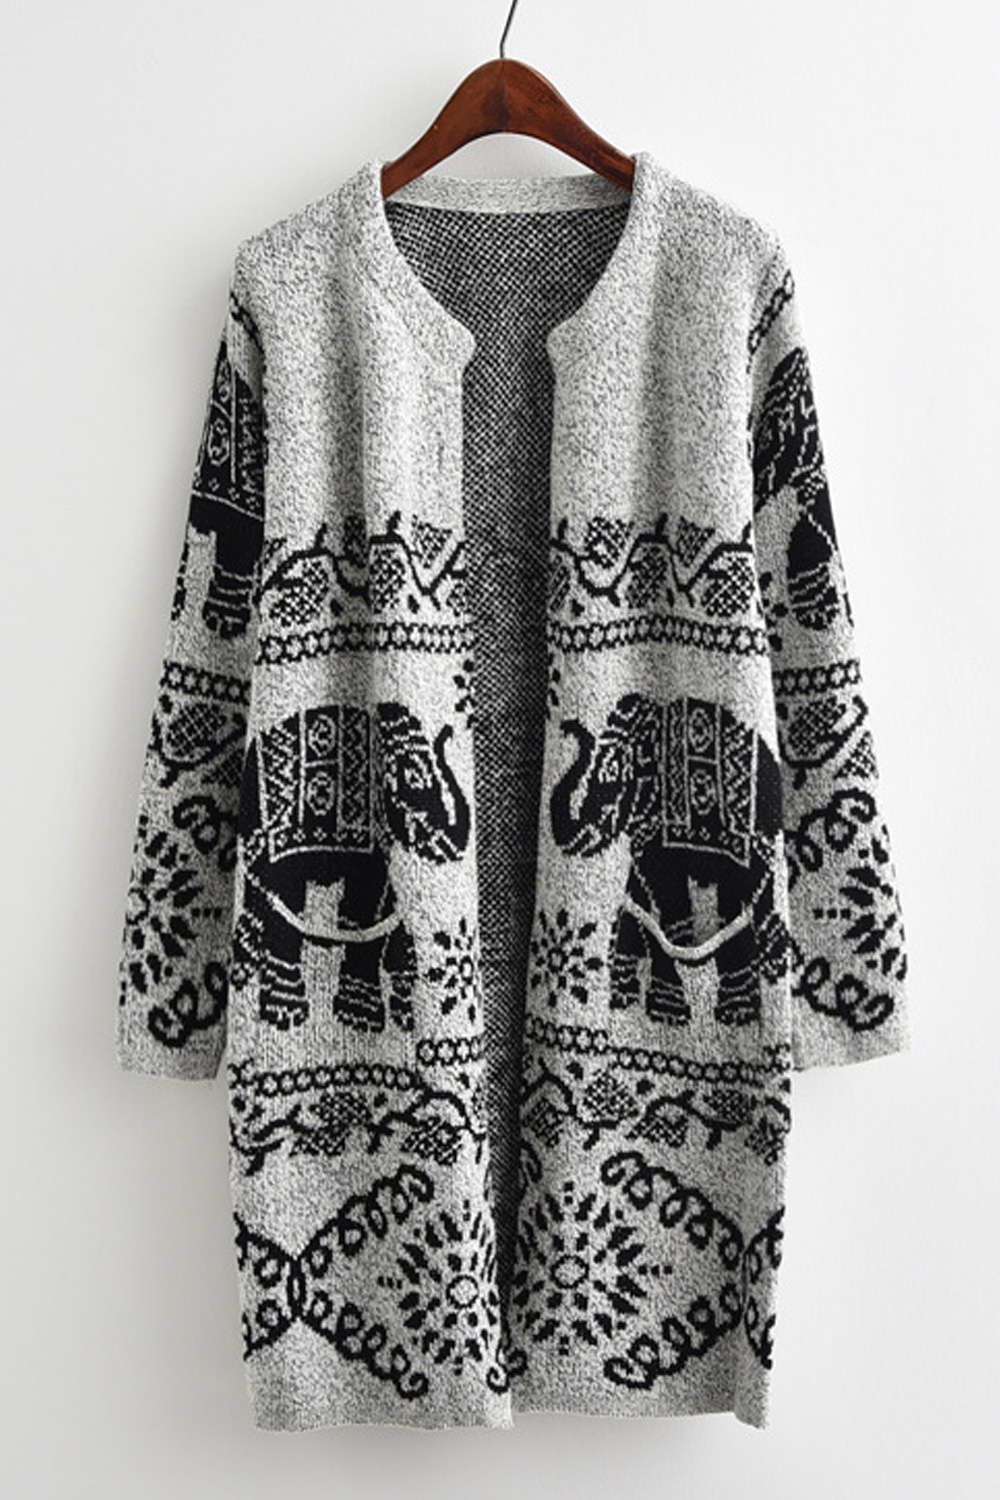 KettyMore Women Round Neck Elephant Printed Loose Warm Knit Cardigan